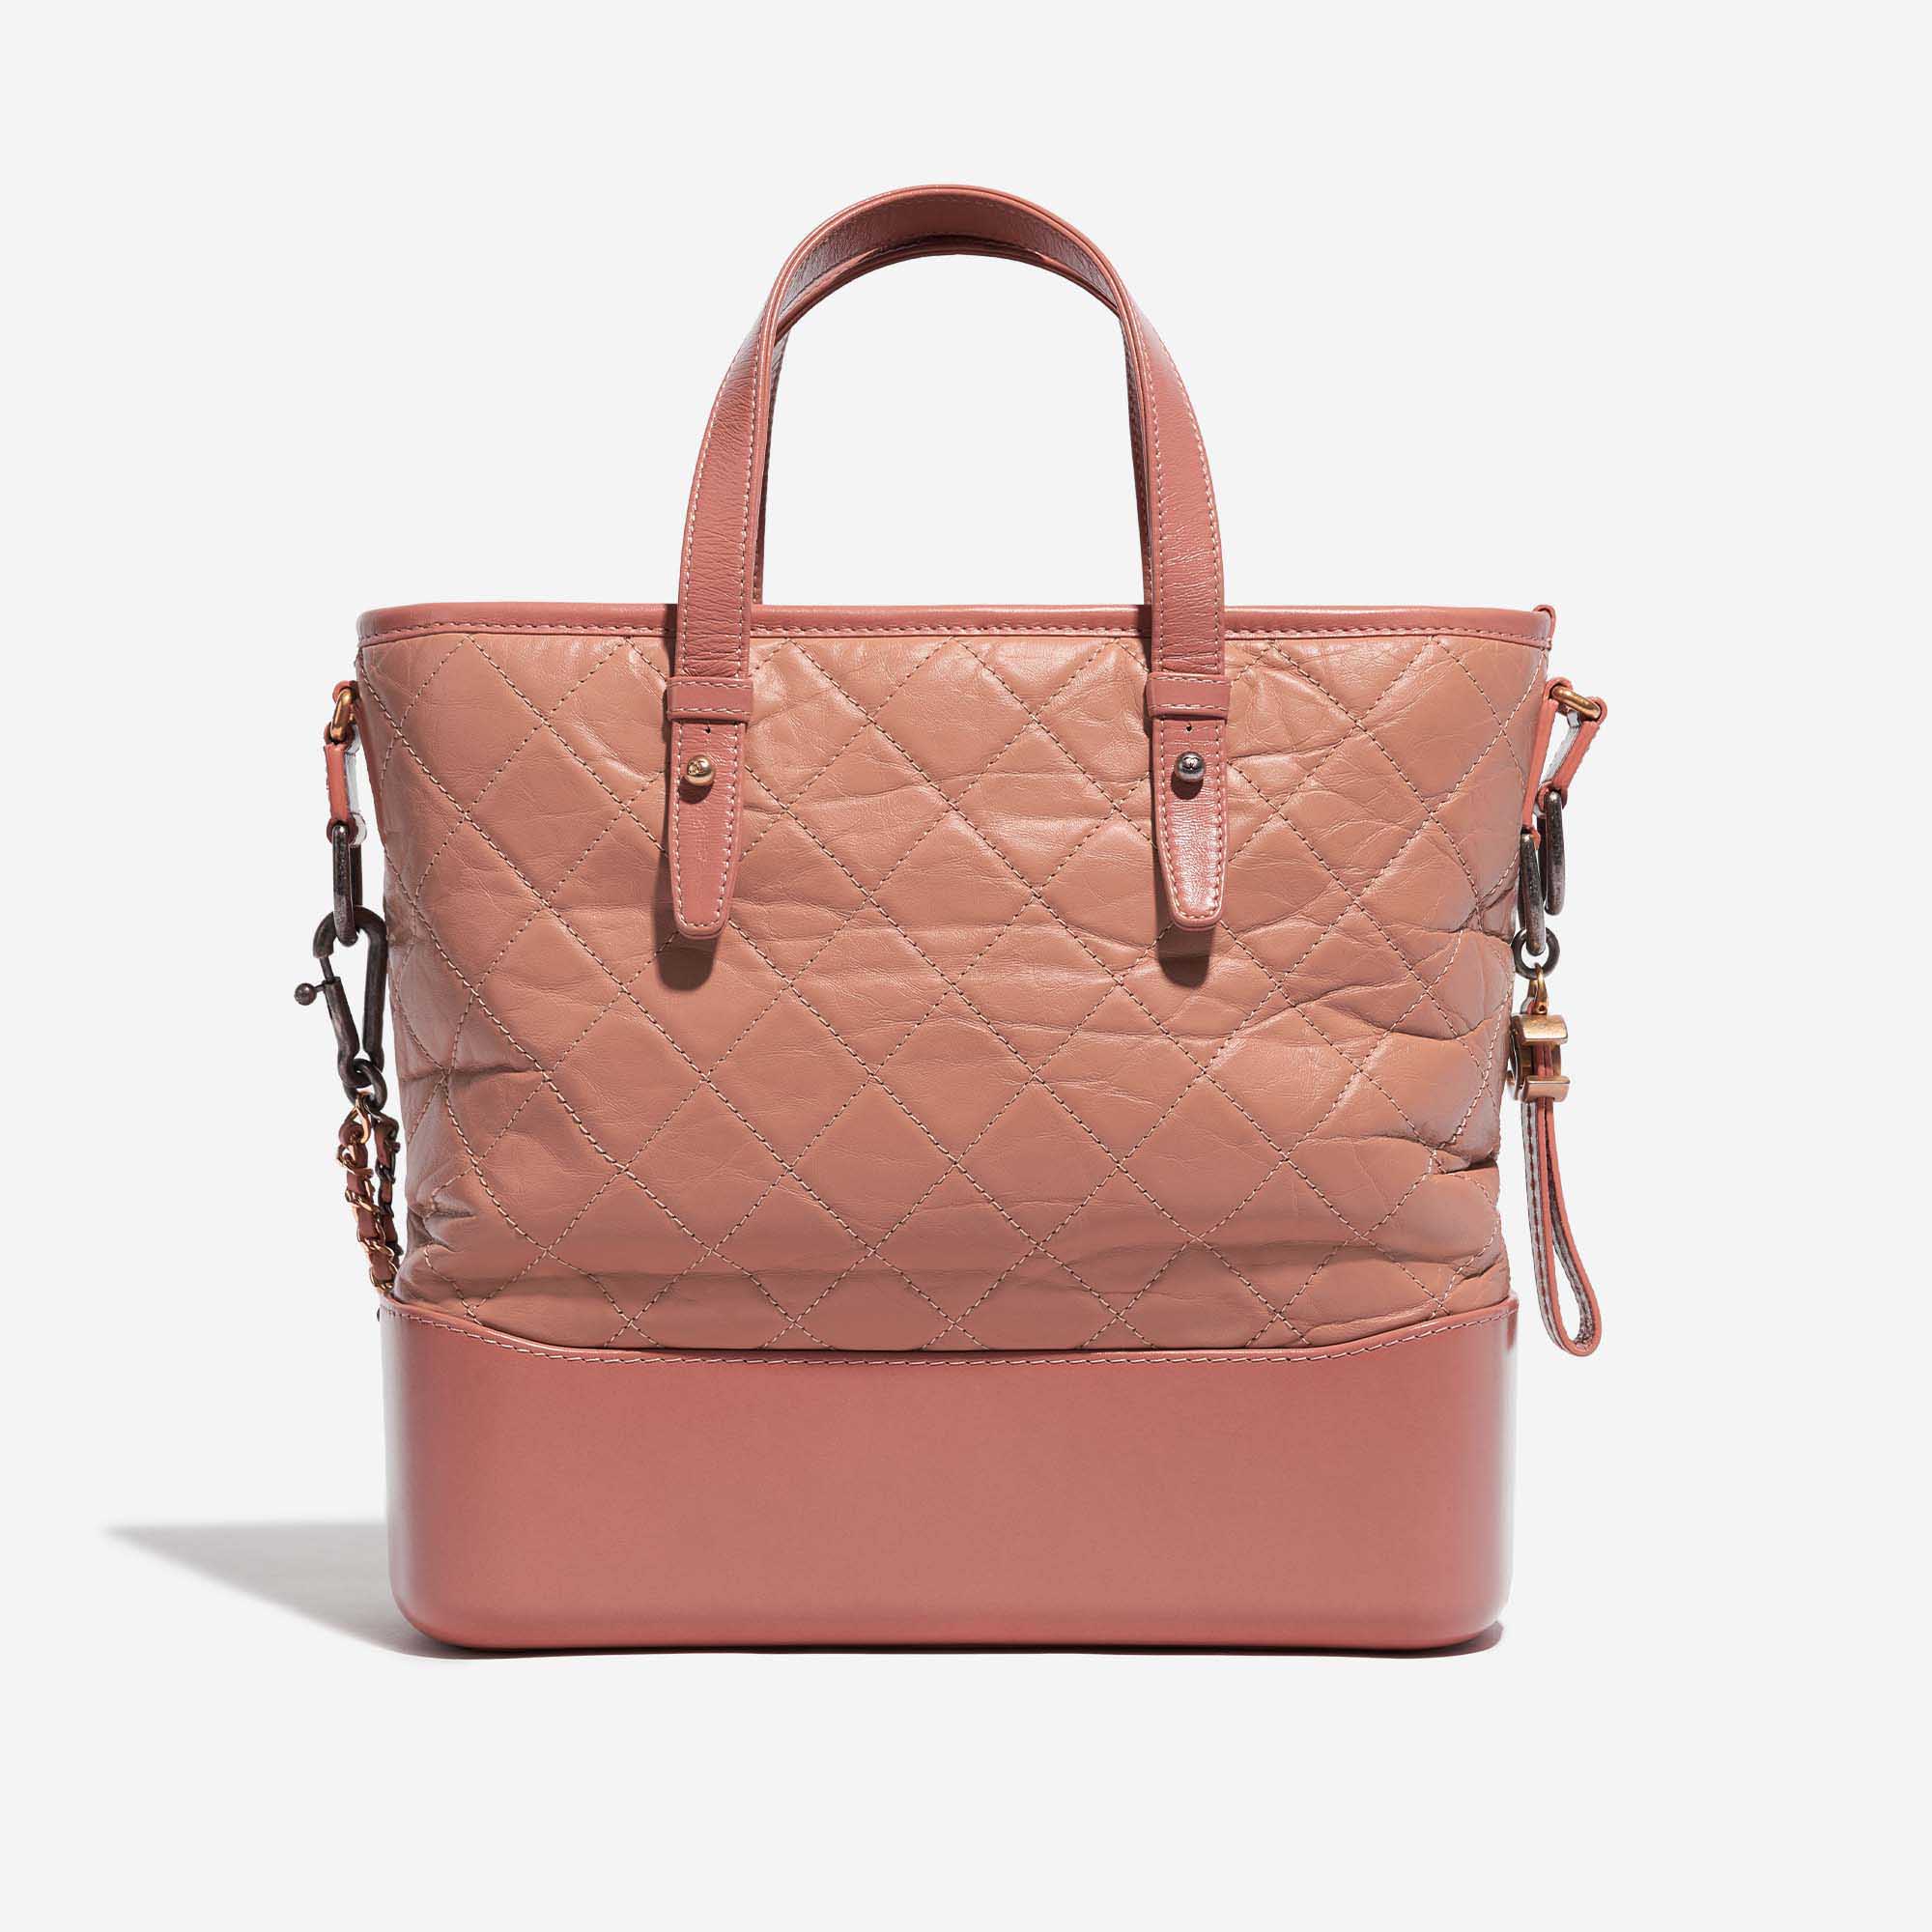 Pre-owned Chanel bag Gabrielle Handle Calf Beige / Dust Rose Beige, Rose Back | Sell your designer bag on Saclab.com